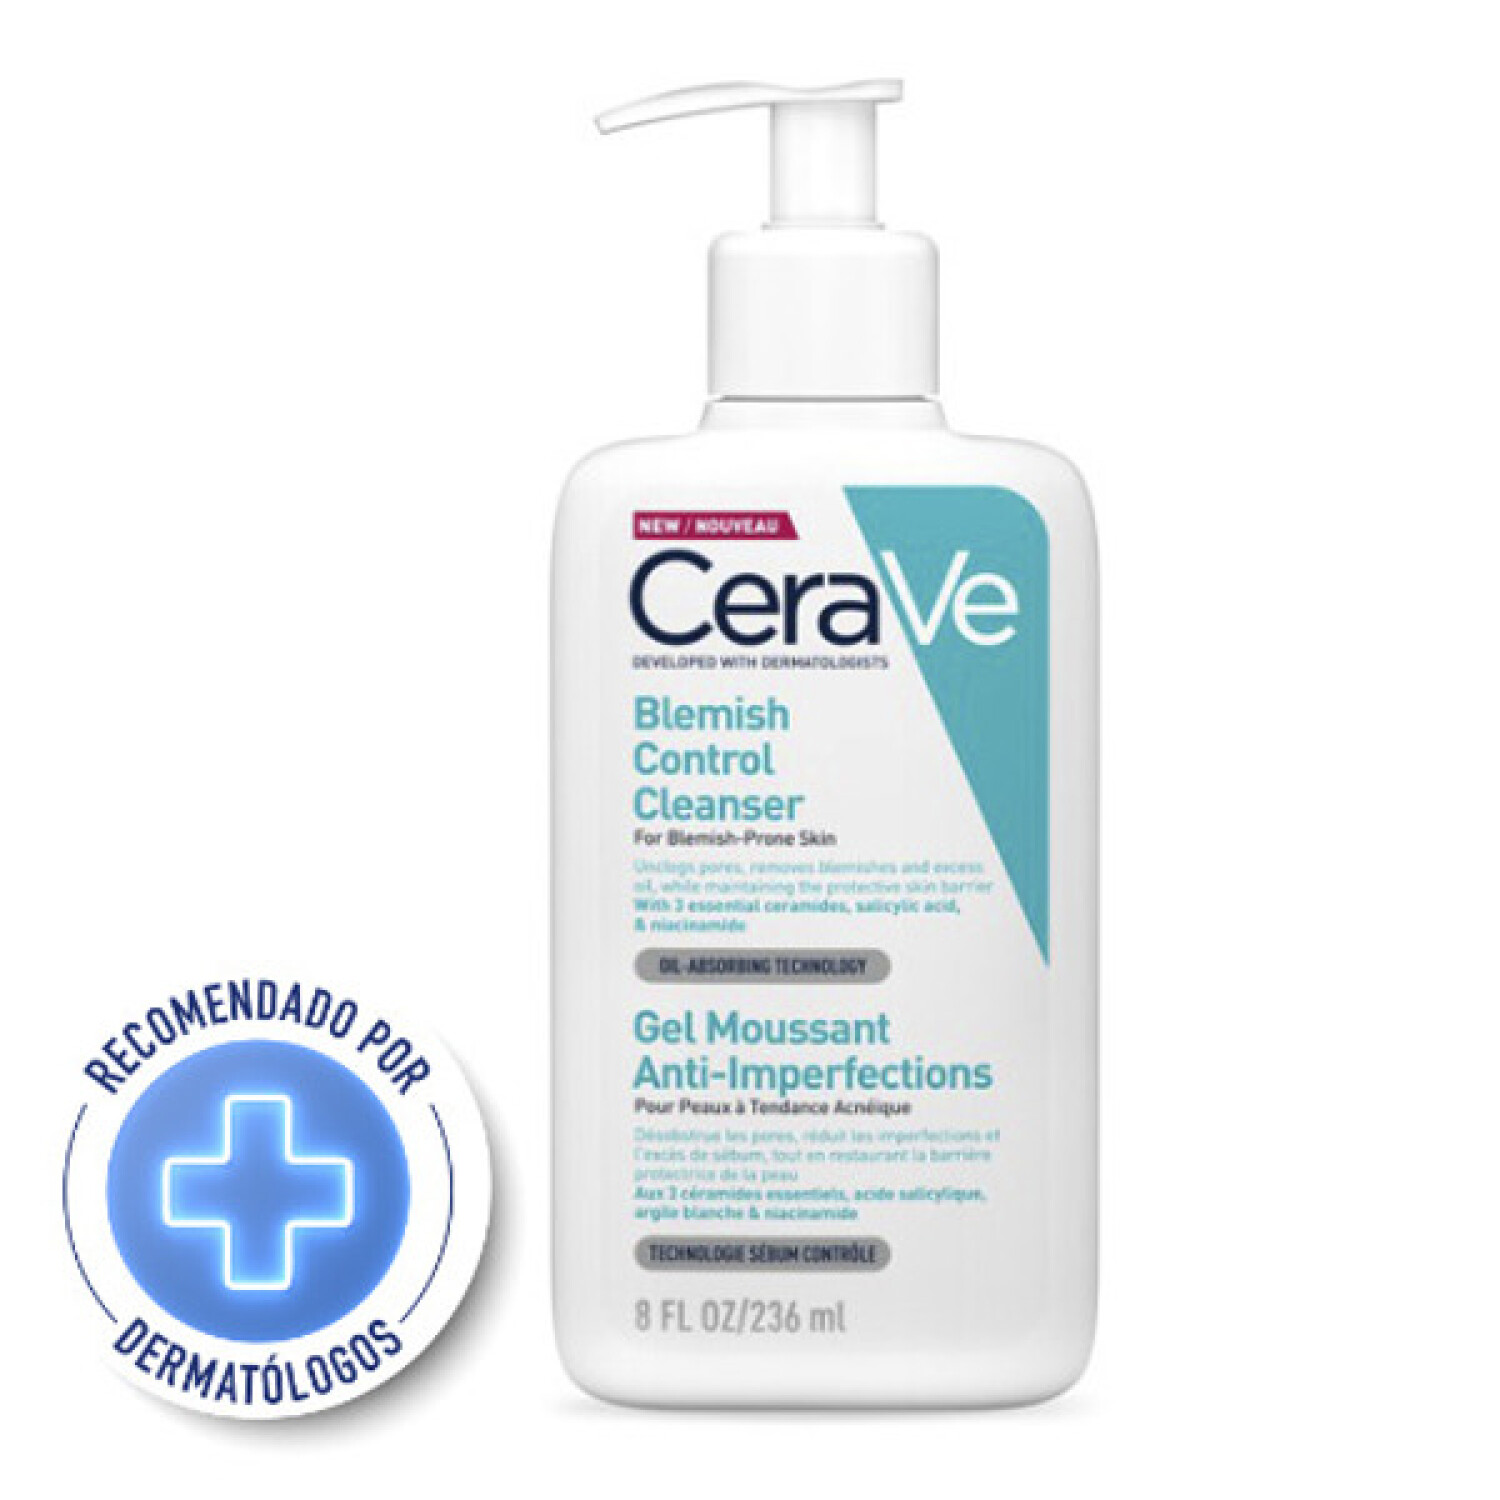 https://f.fcdn.app/imgs/4be37e/www.farmaciaparquemiramar.com.uy/pamiuy/f8b2/original/catalogo/97227_97227_1/1500-1500/cerave-acne-cleanser-236m-ml-cerave-acne-cleanser-236m-ml.jpg